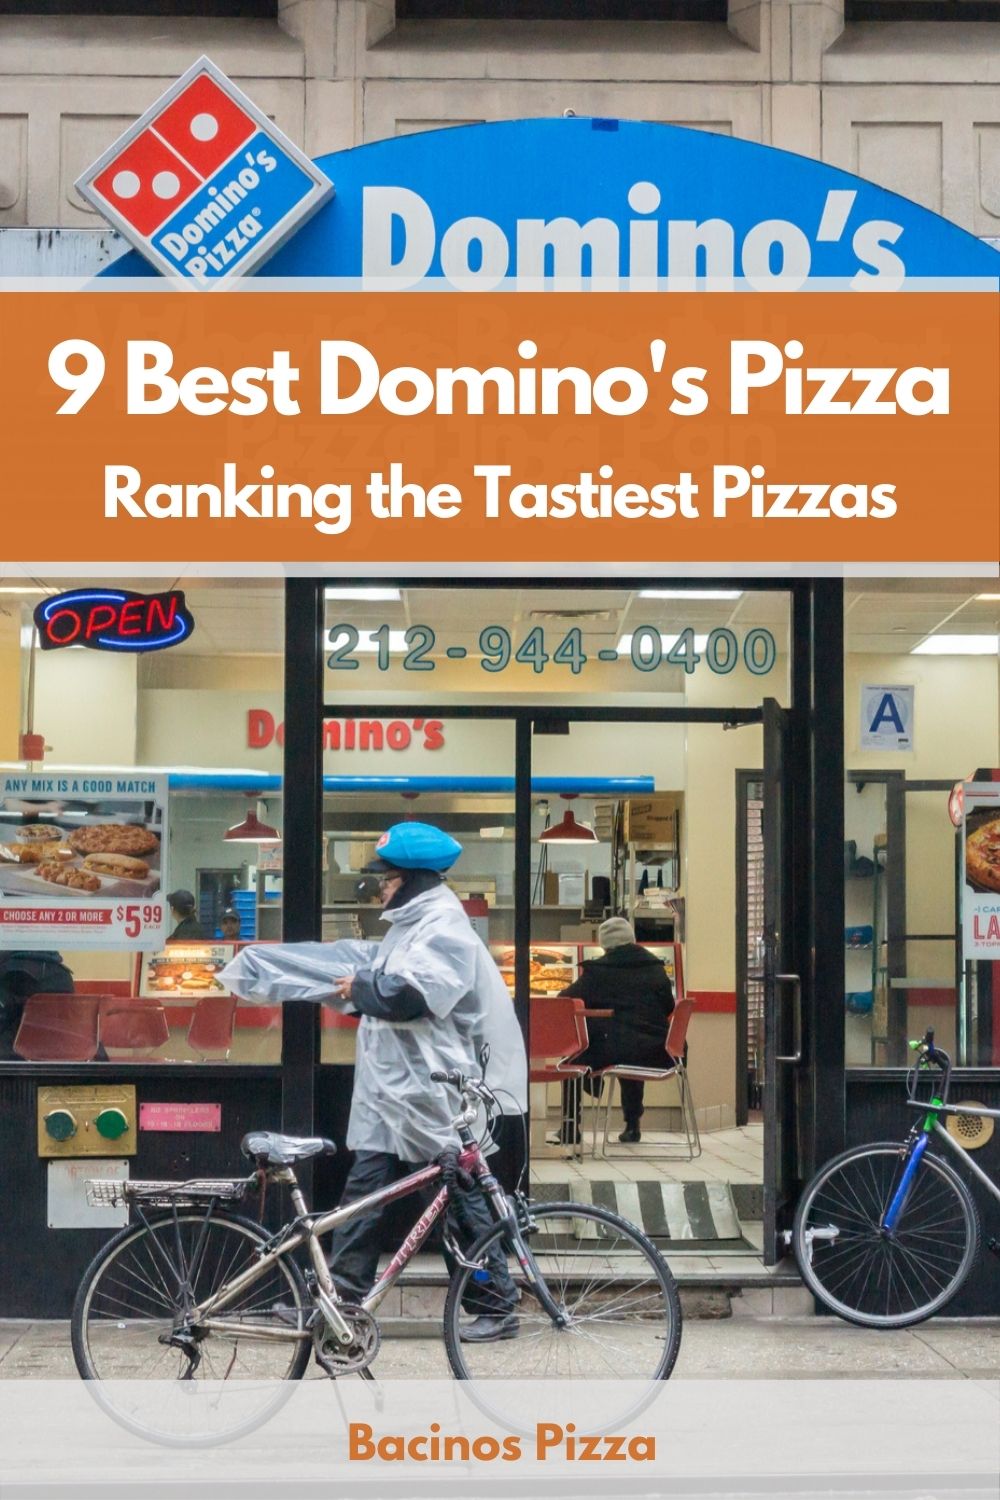 9 Best Domino's Pizza – Ranking the Tastiest Pizzas pin